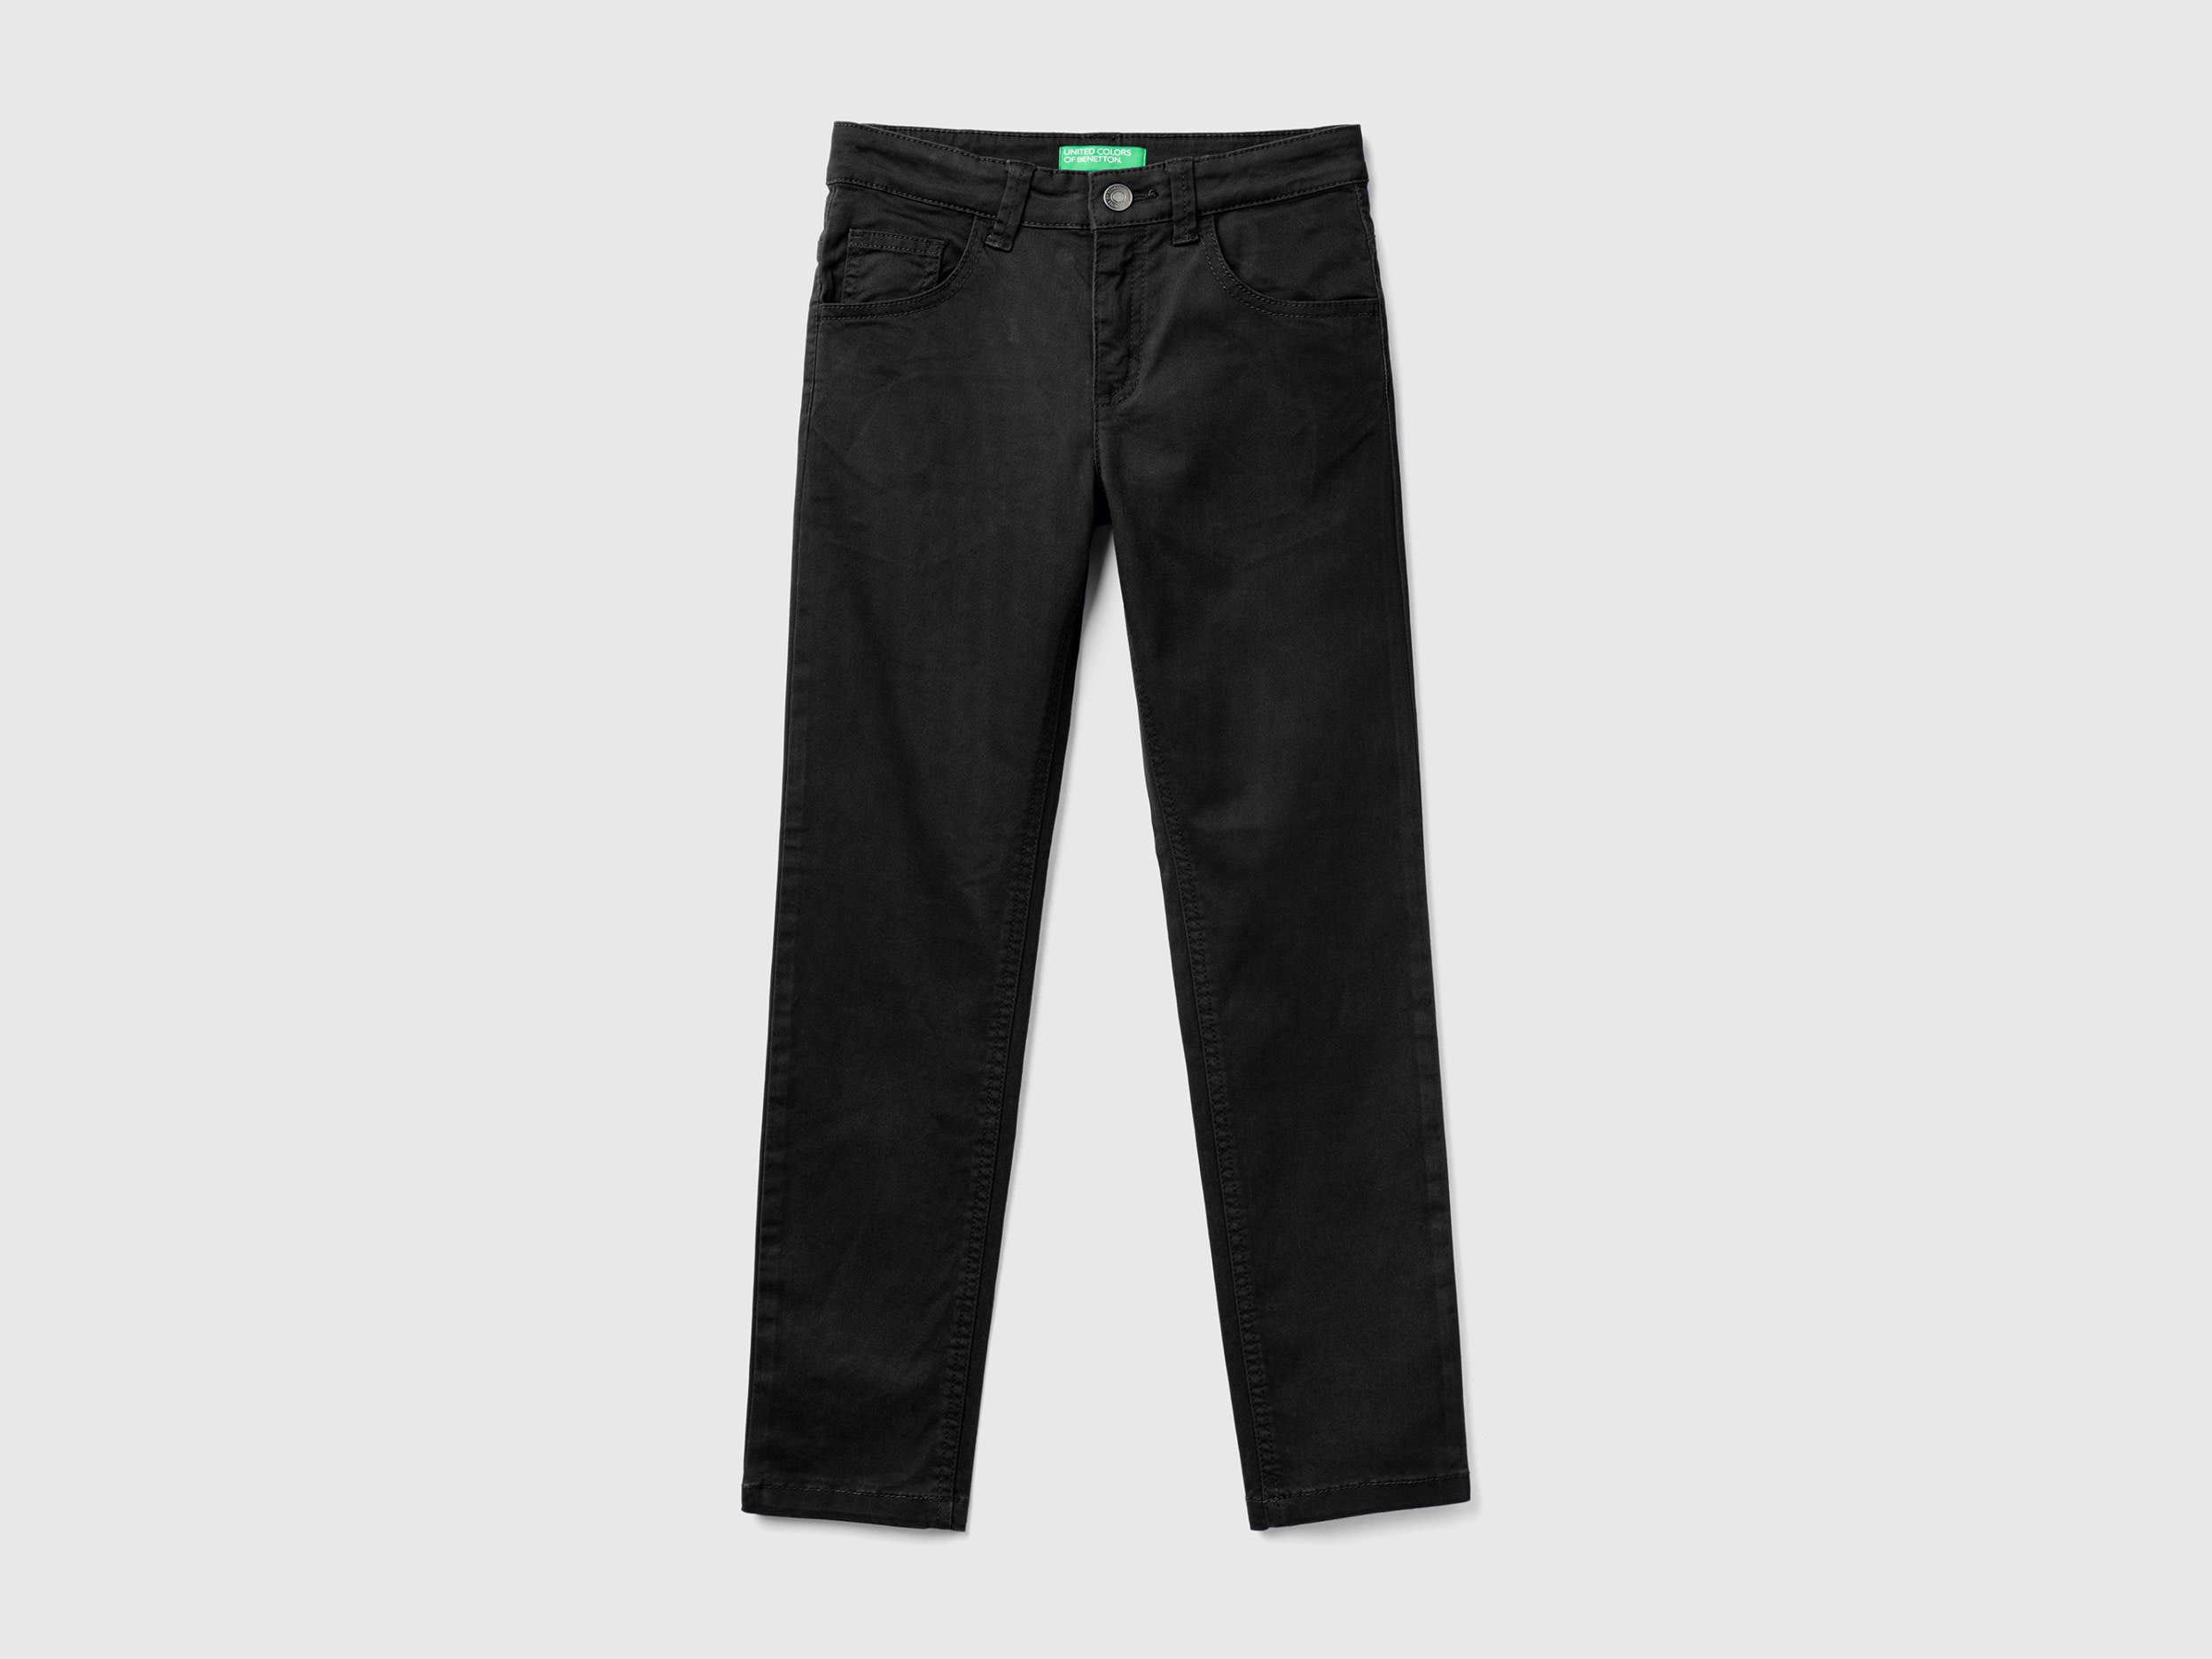 Benetton, Five-pocket Slim Fit Trousers, size 3XL, Black, Kids